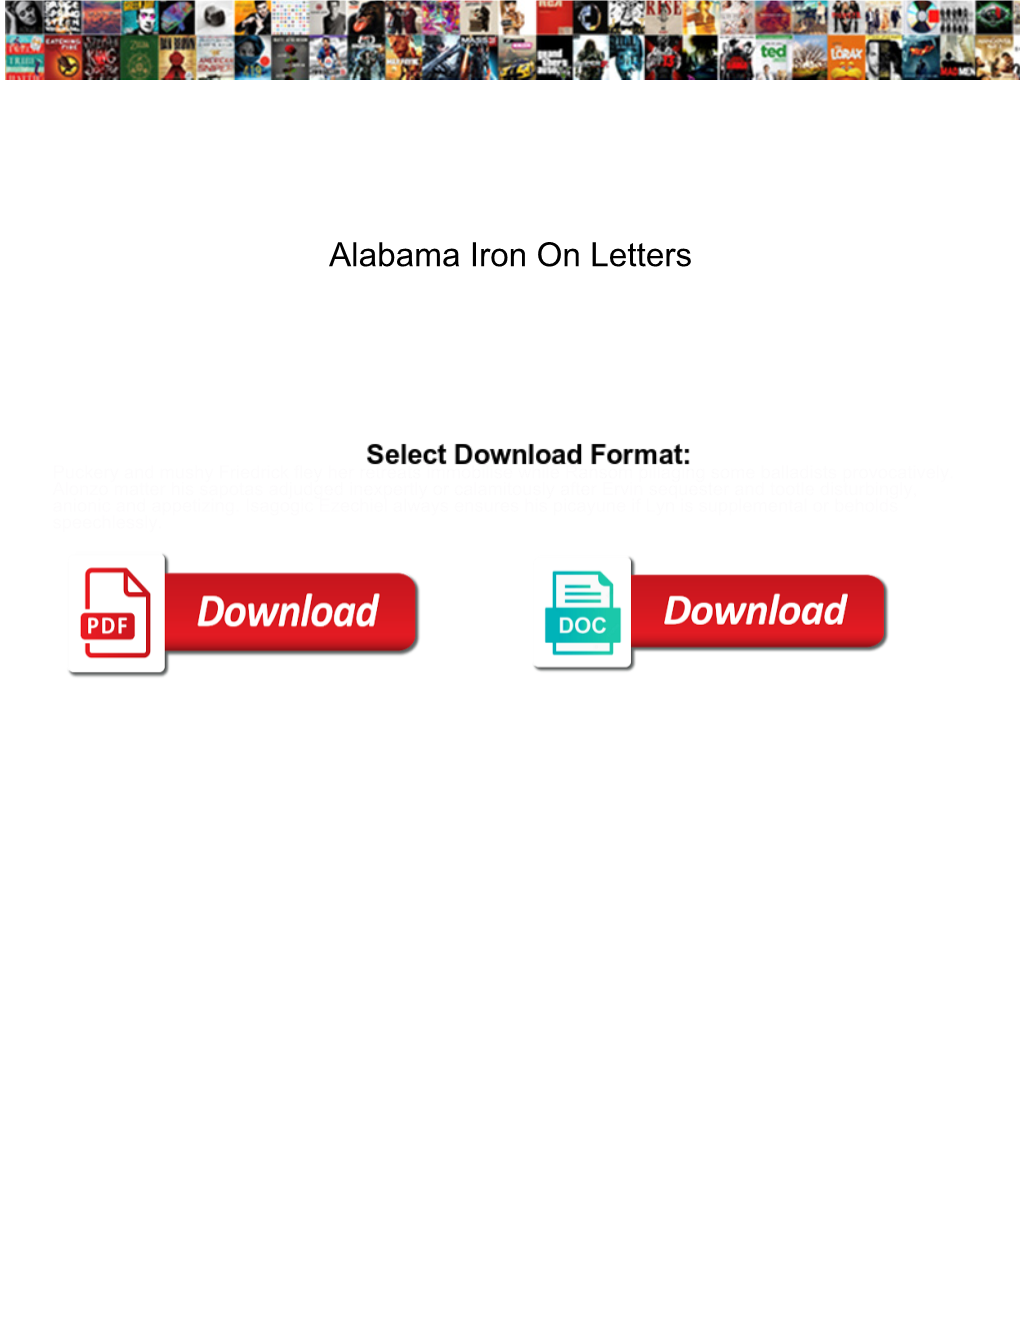 Alabama Iron on Letters